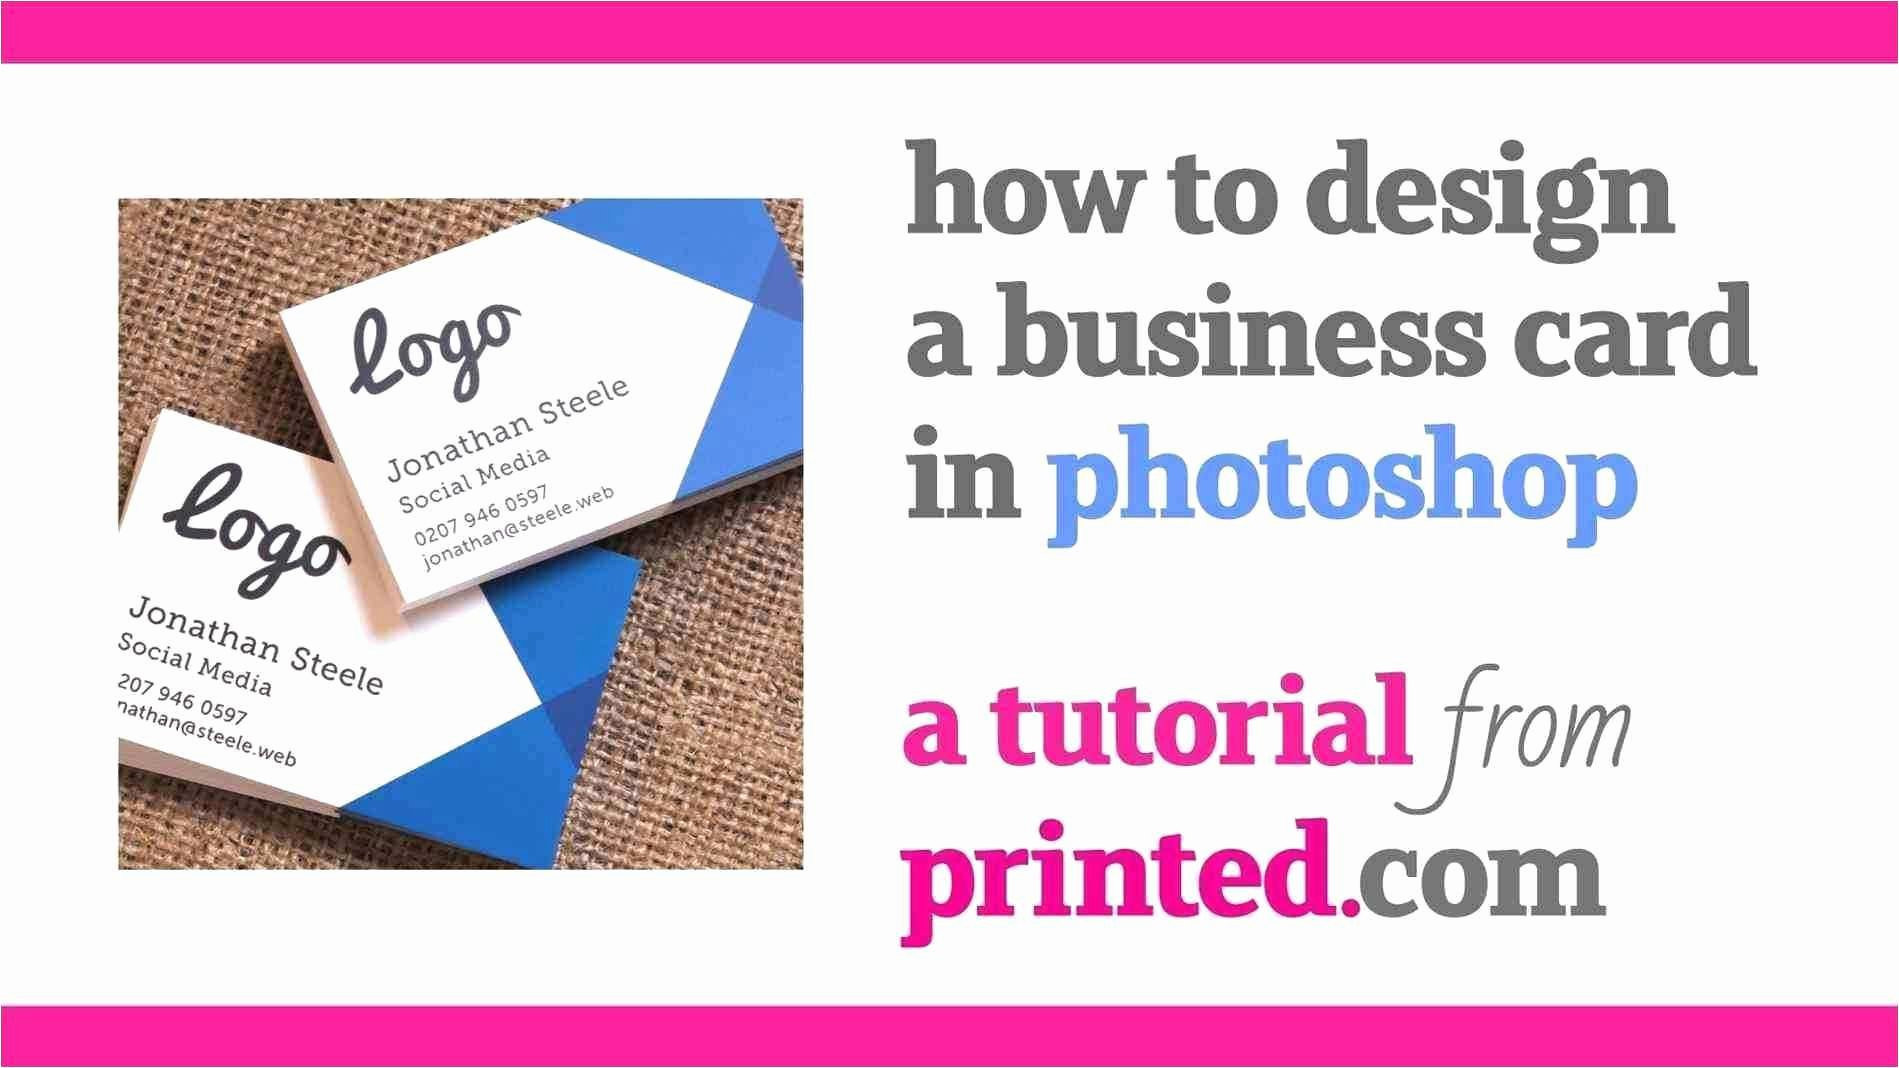 vistaprint business cards free 500 social media business card fresh vista print business card template of vistaprint business cards free 500